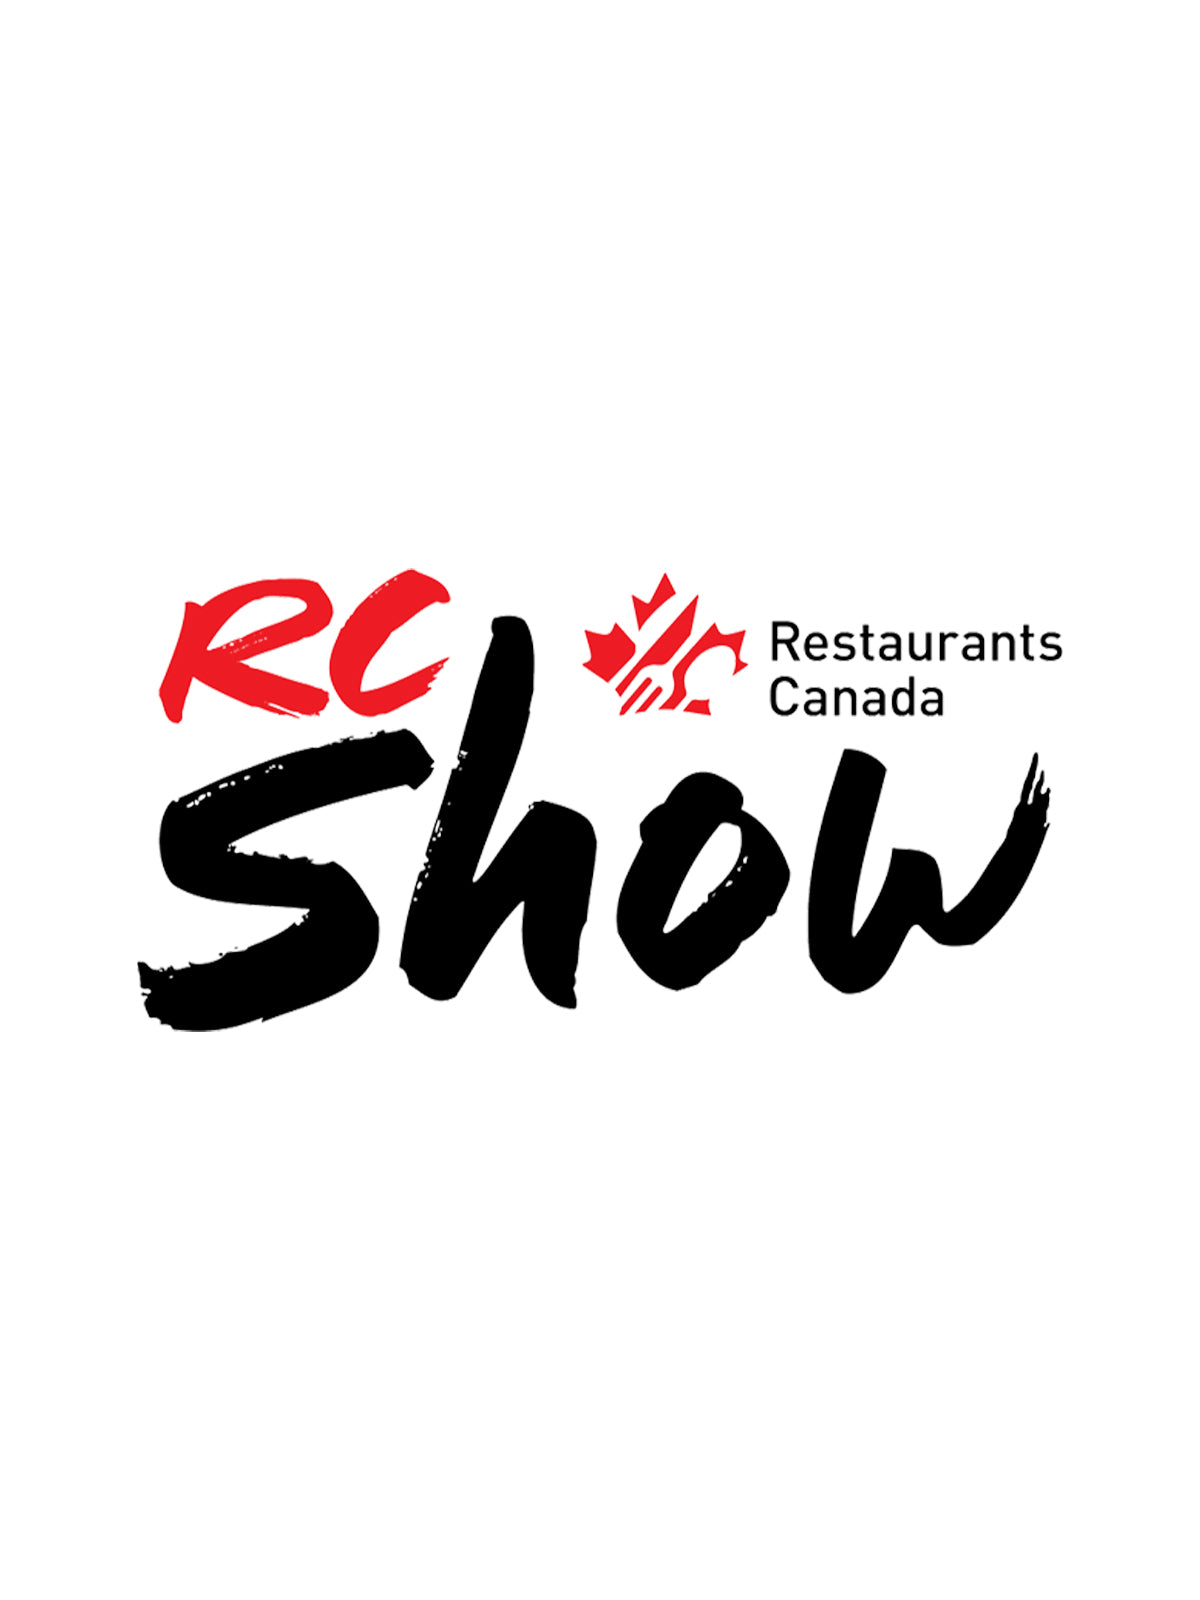 Restaurants Canada Show Logo